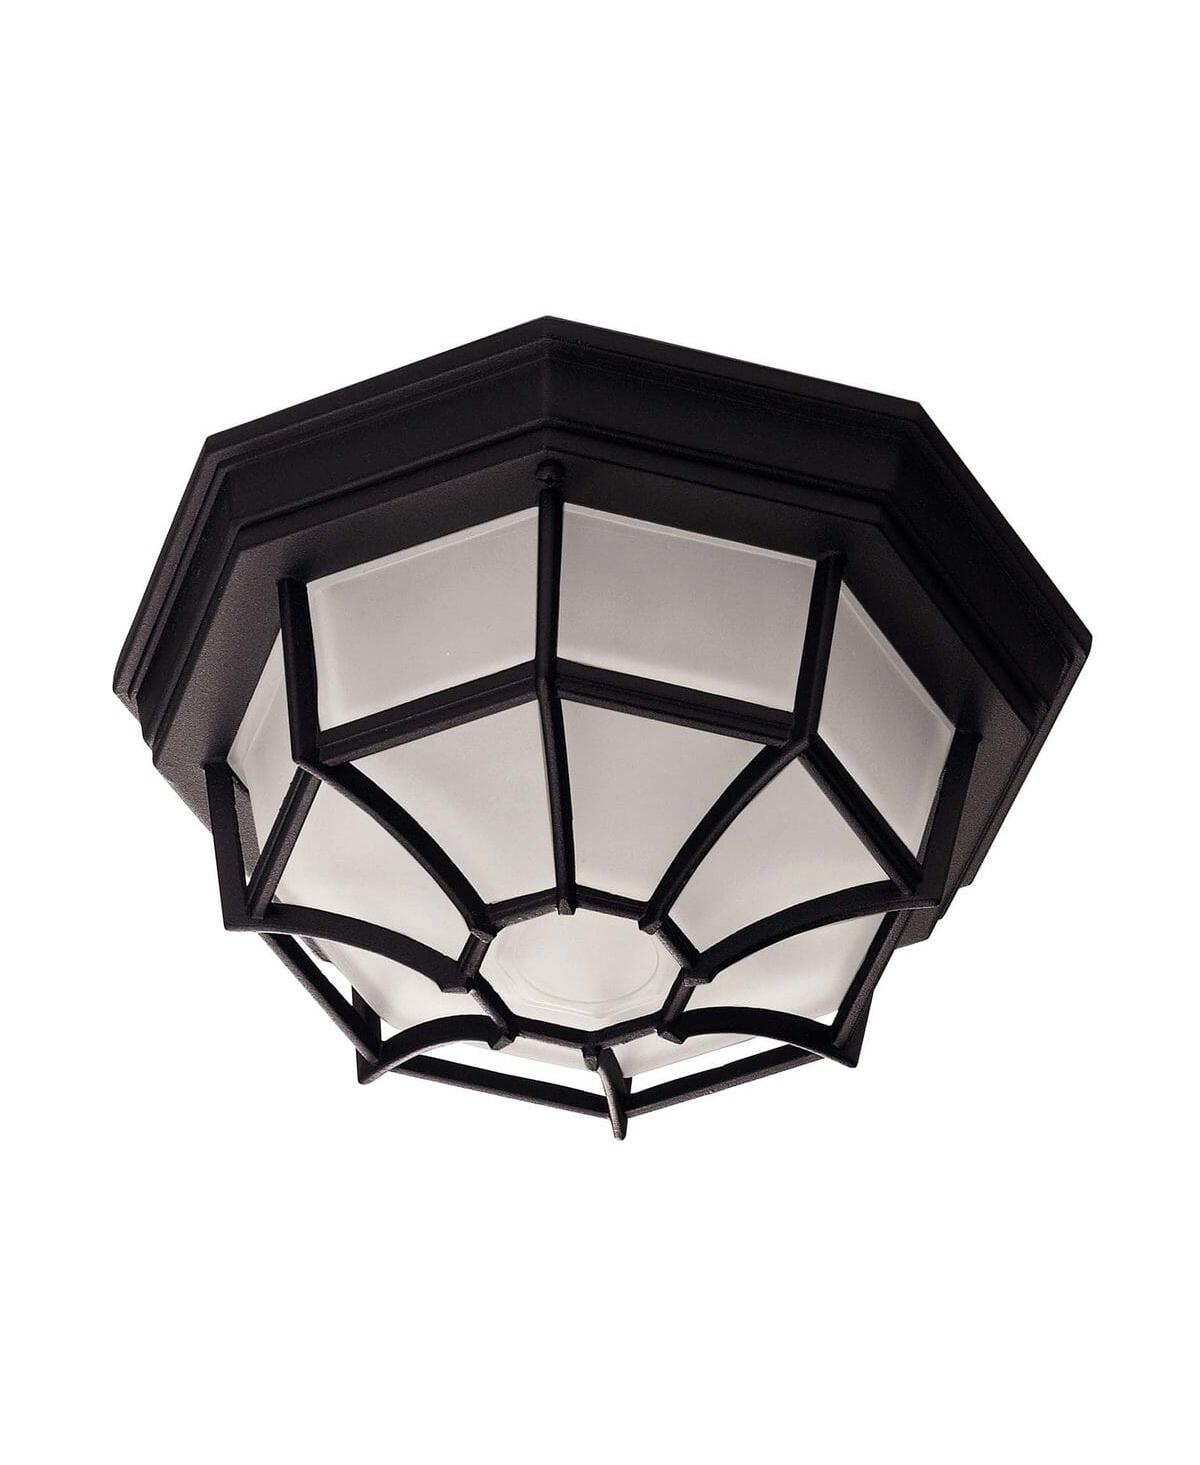 11" Outdoor Ceiling Light in Black - Black